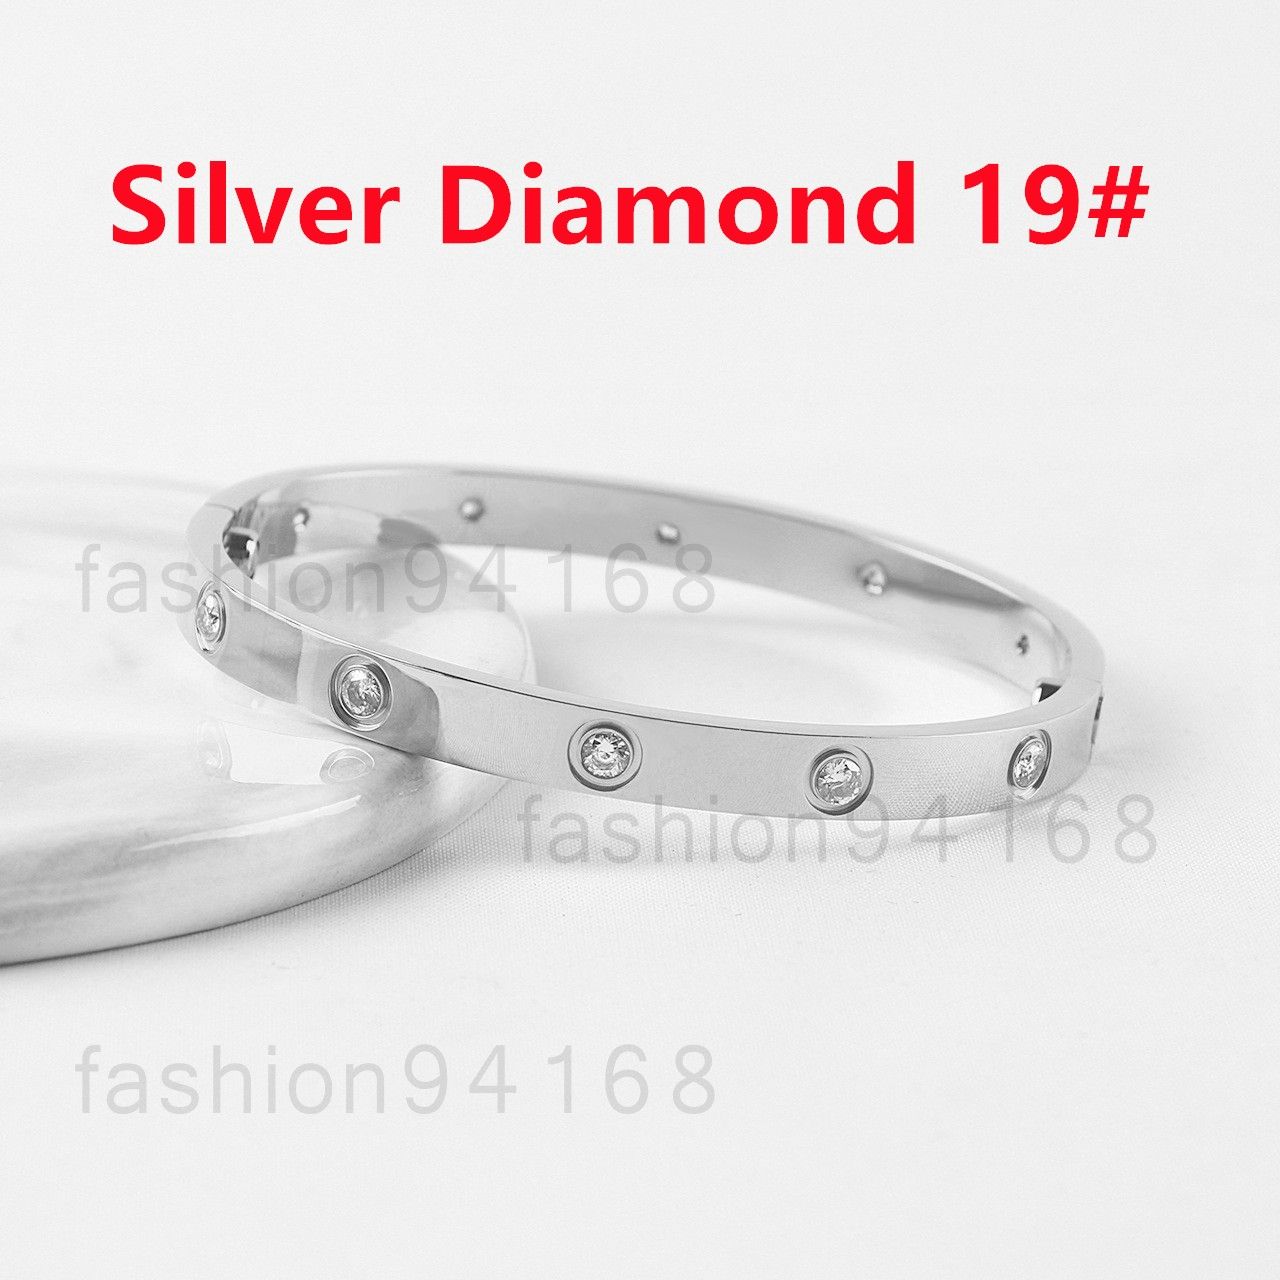 Silver 19+Diamonds